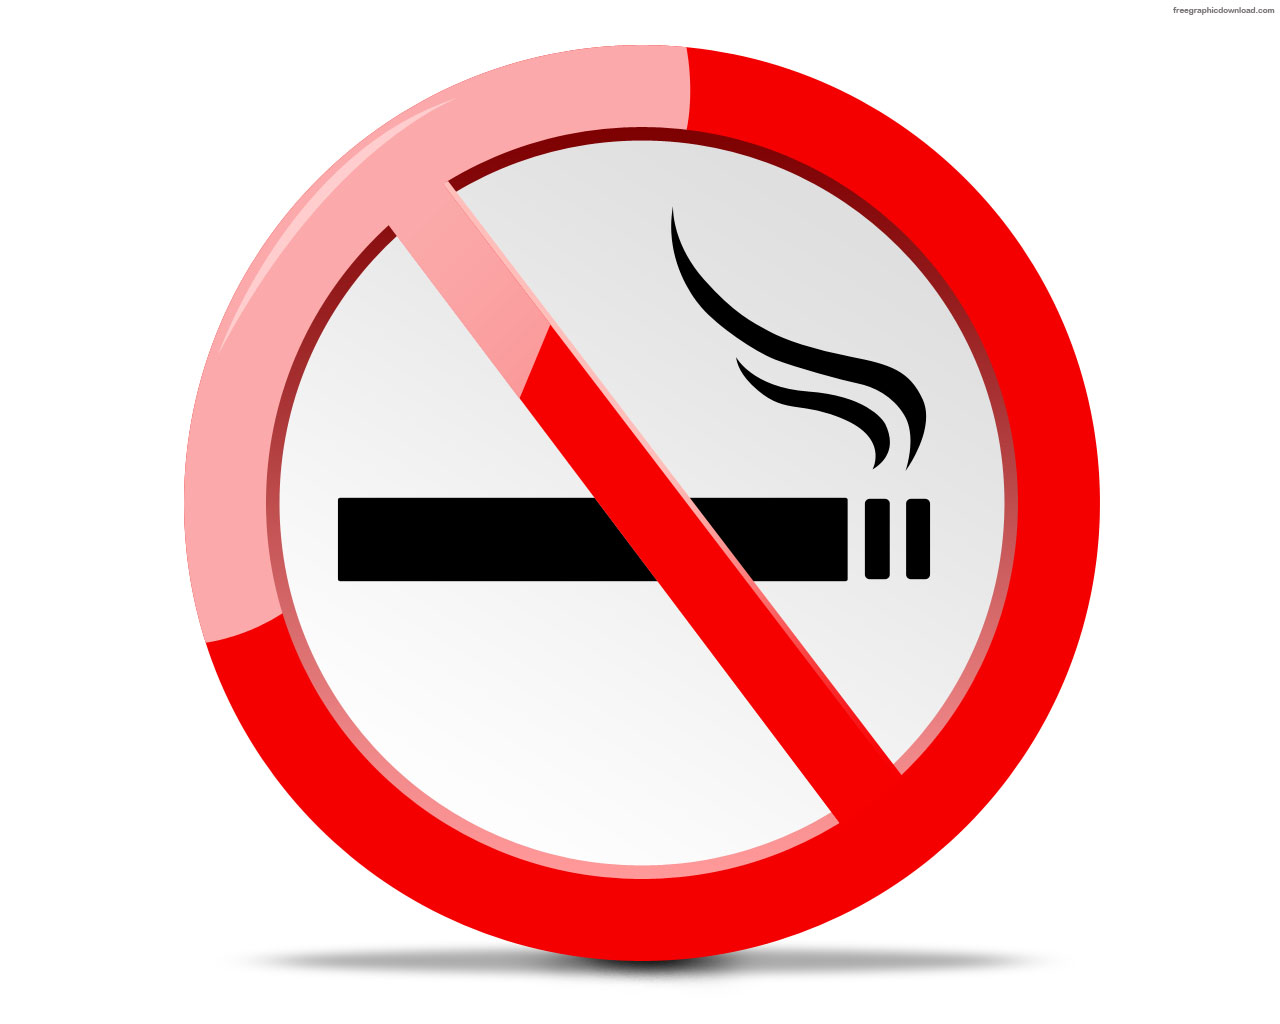 PHA moving to initiate no smoking policy | Peoria Public Radio